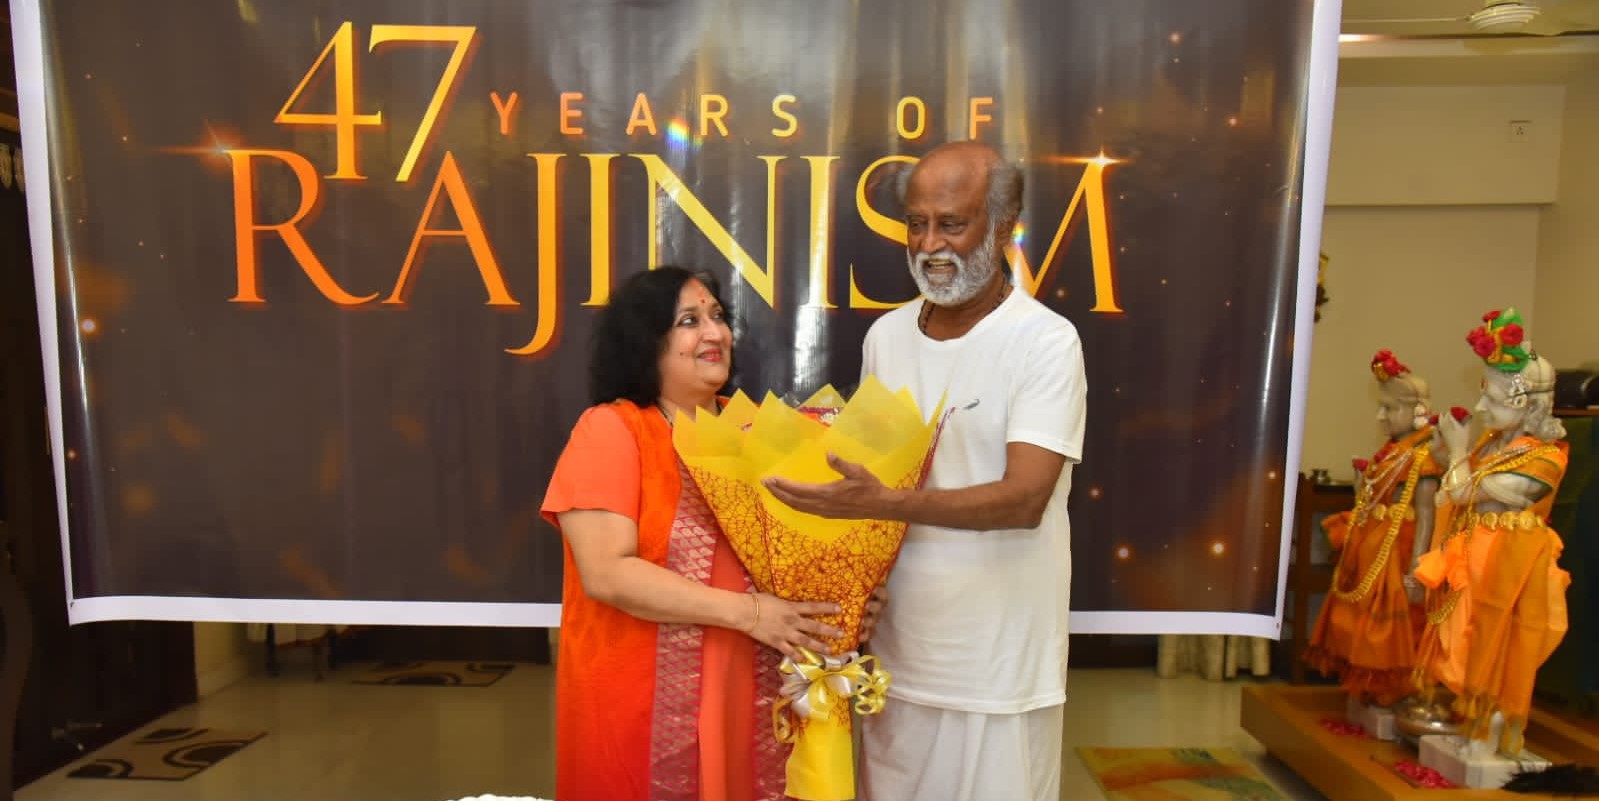 Rajinikanth with his wife. (Supplied)